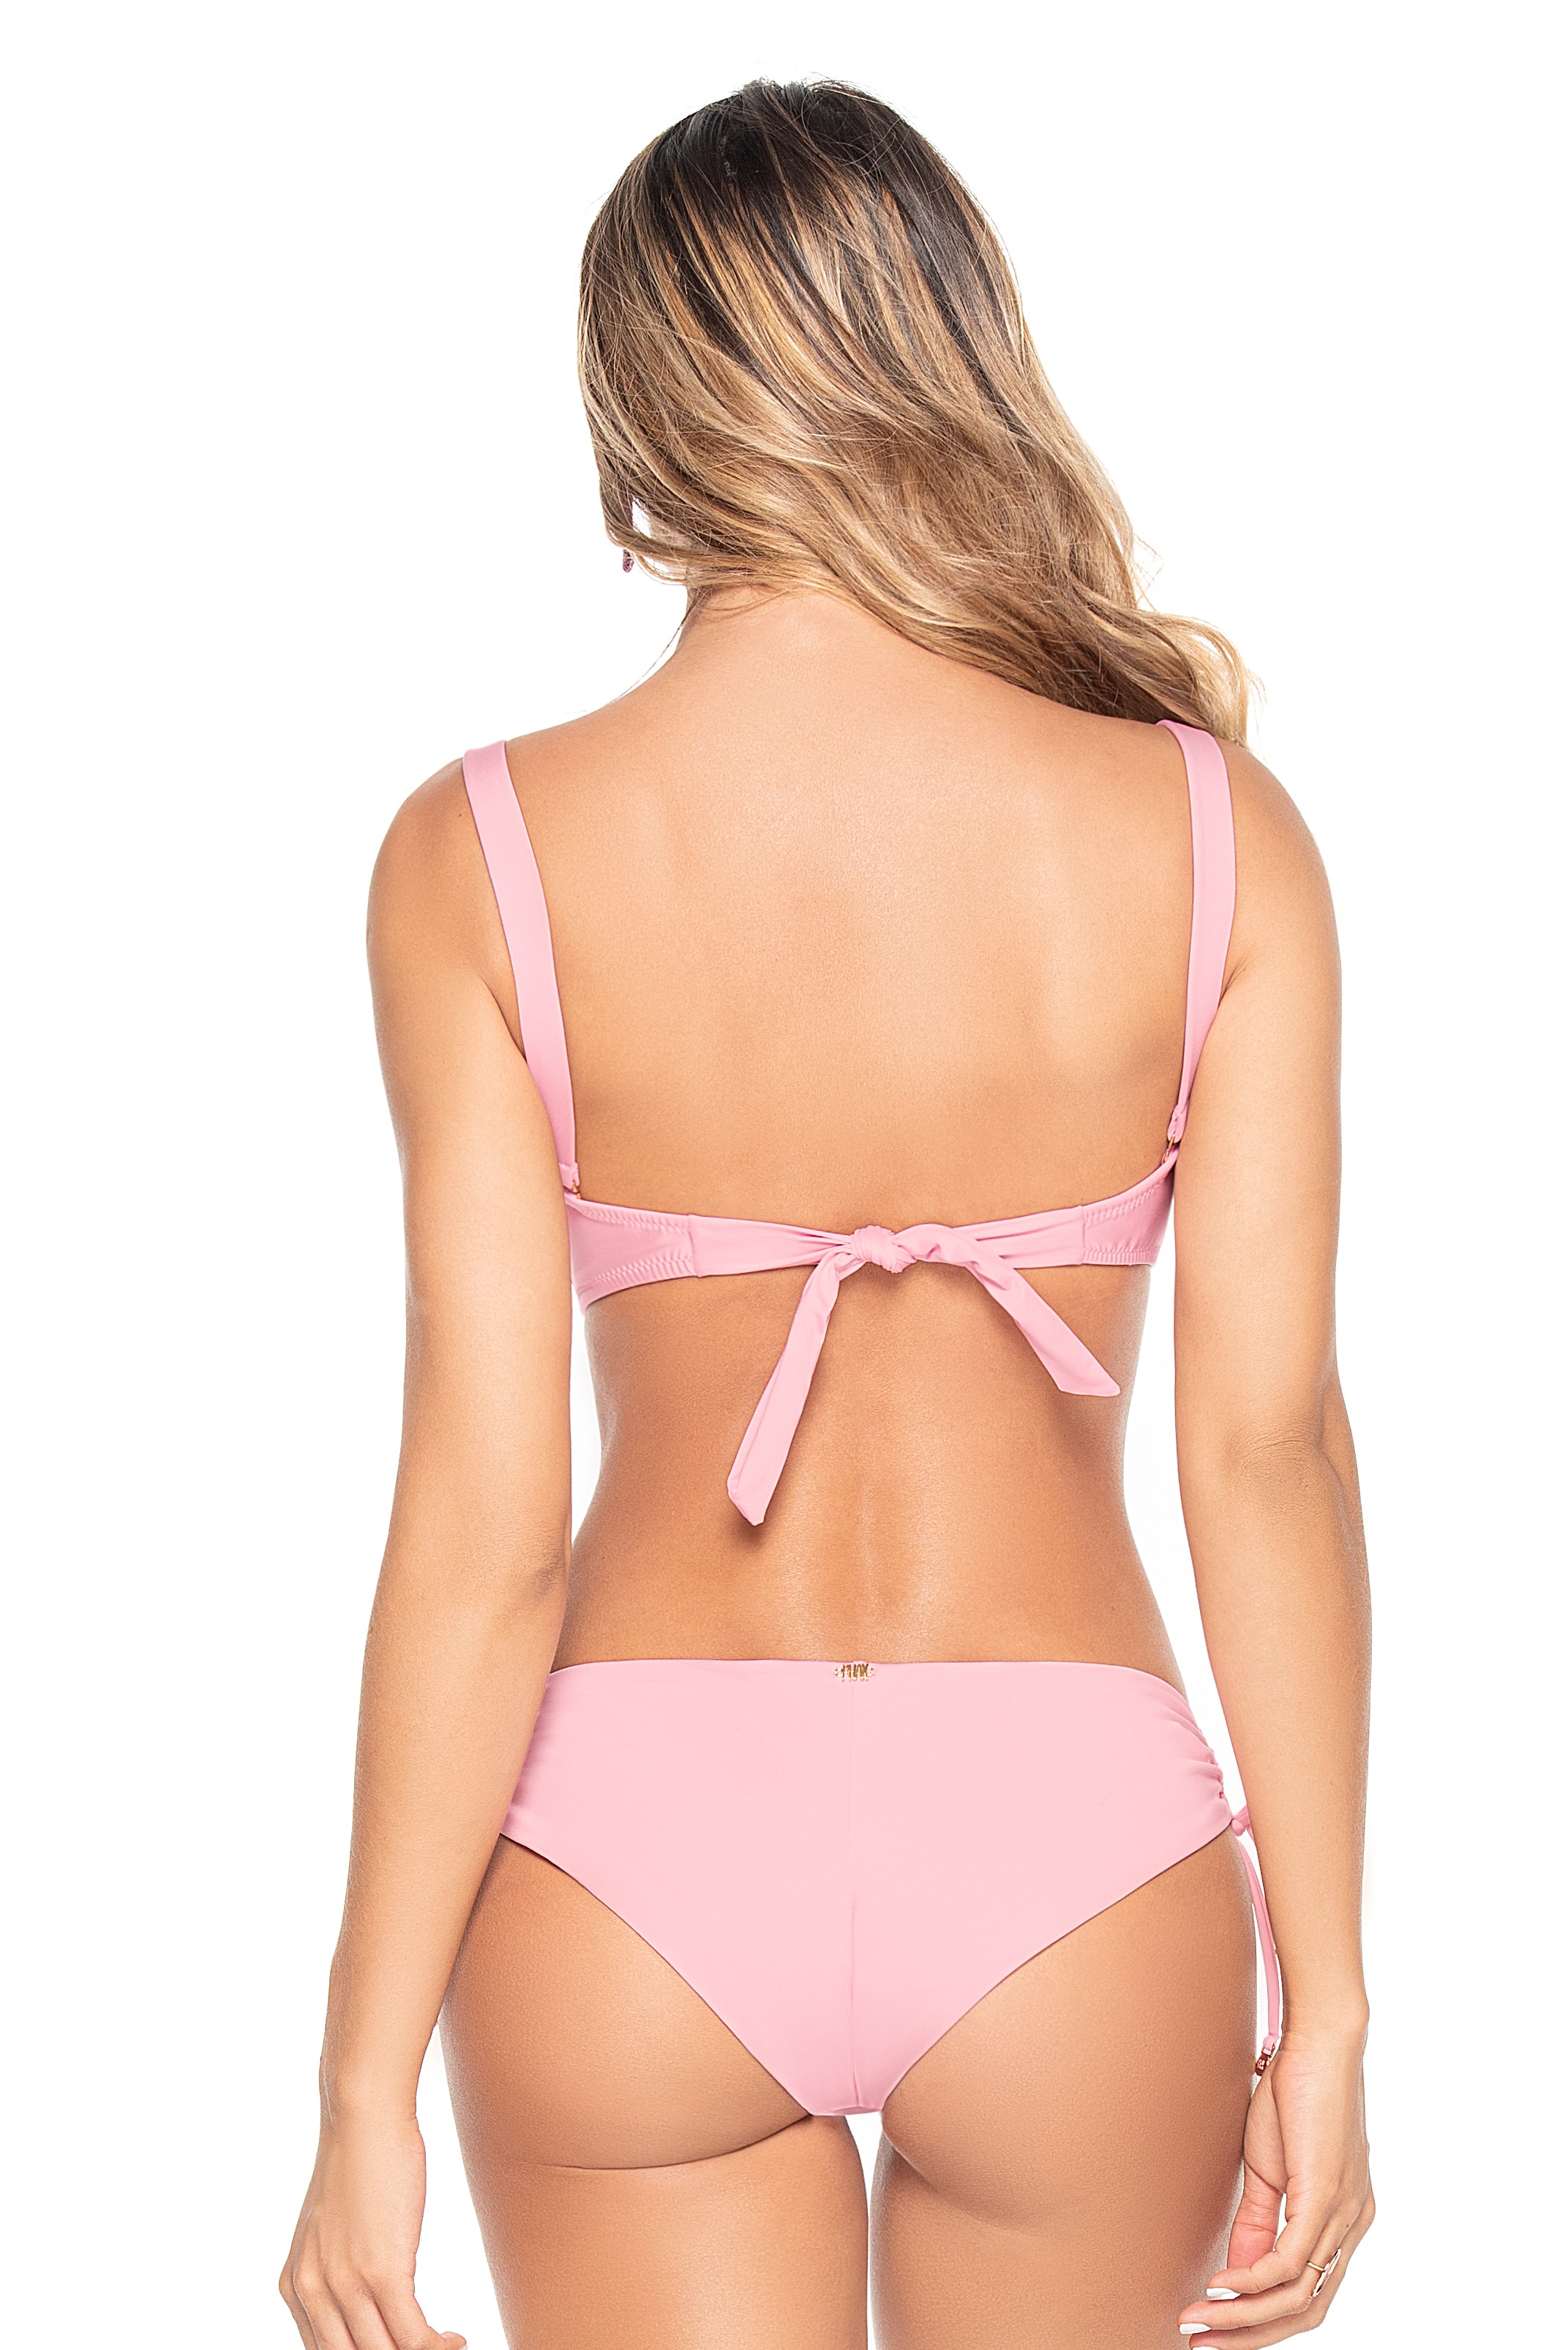 Phax Light Pink Strapless Wire Bikini 